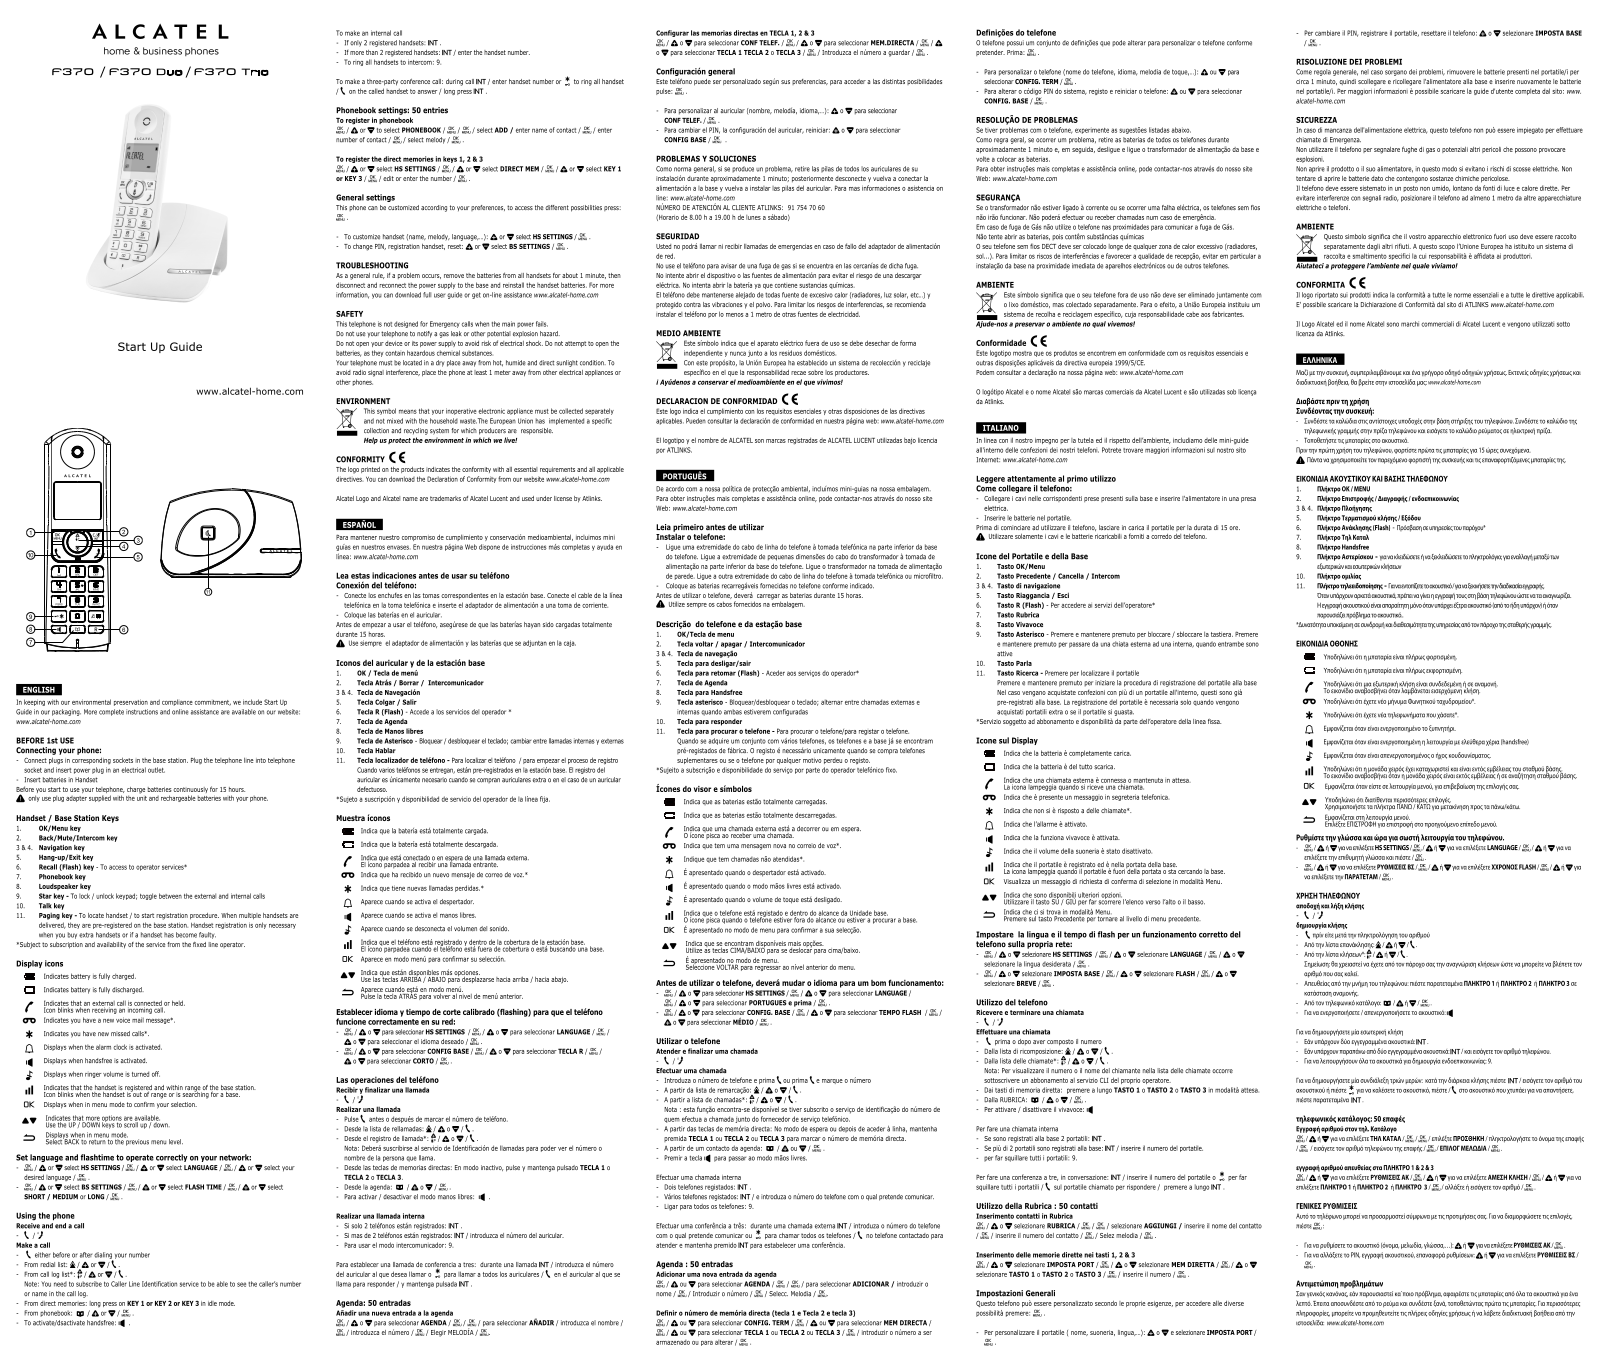 Alcatel F370 Manual